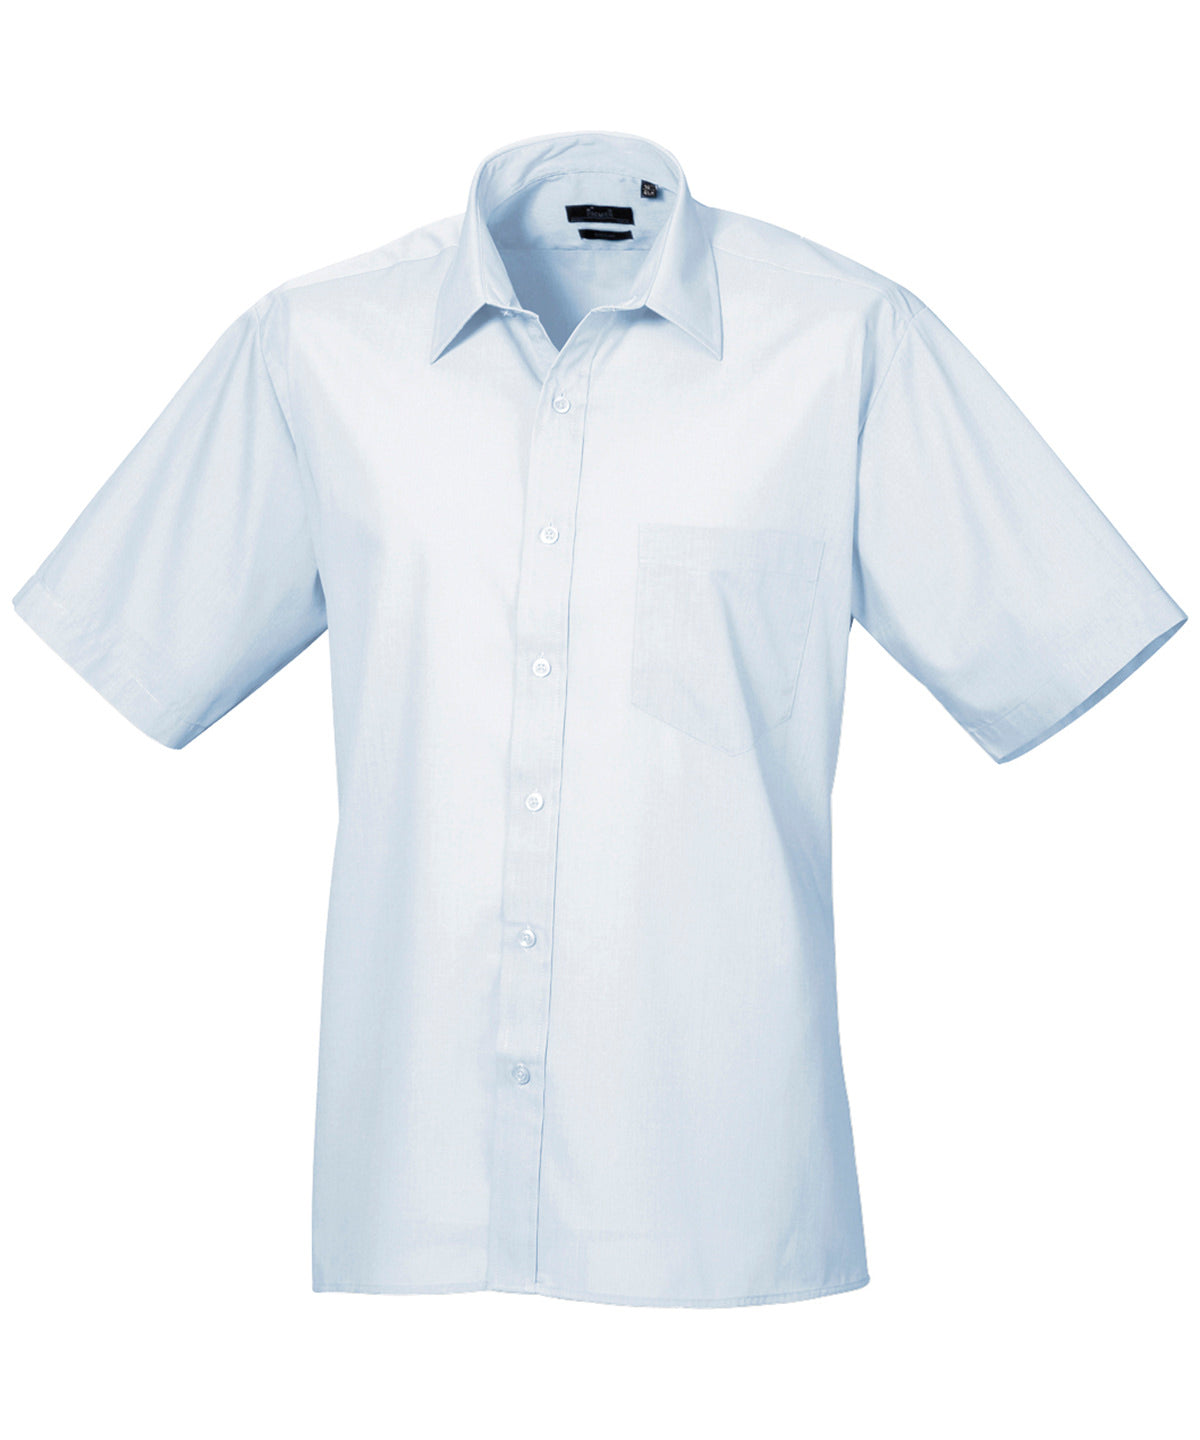 Premier Short Sleeve Poplin Shirt Blue color - COOZO